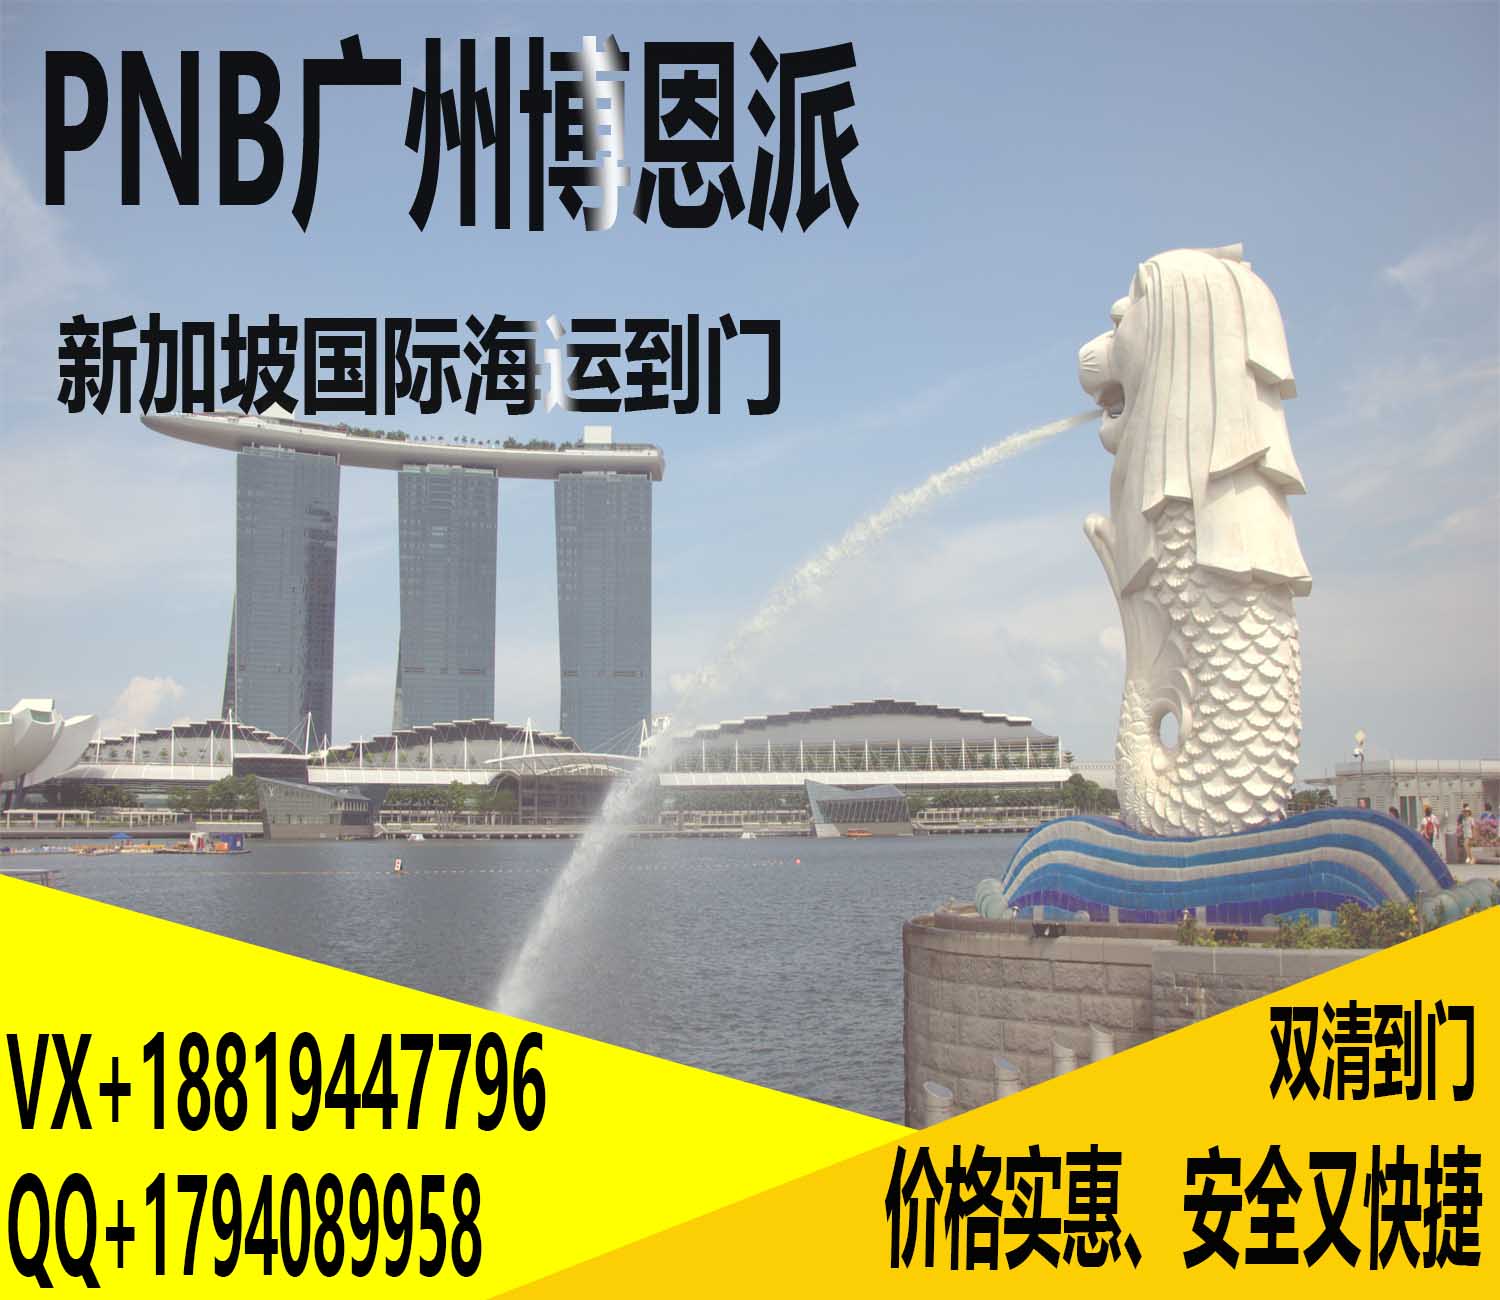 PNB博恩派-磨抛光电动工具从中国海运到新加坡